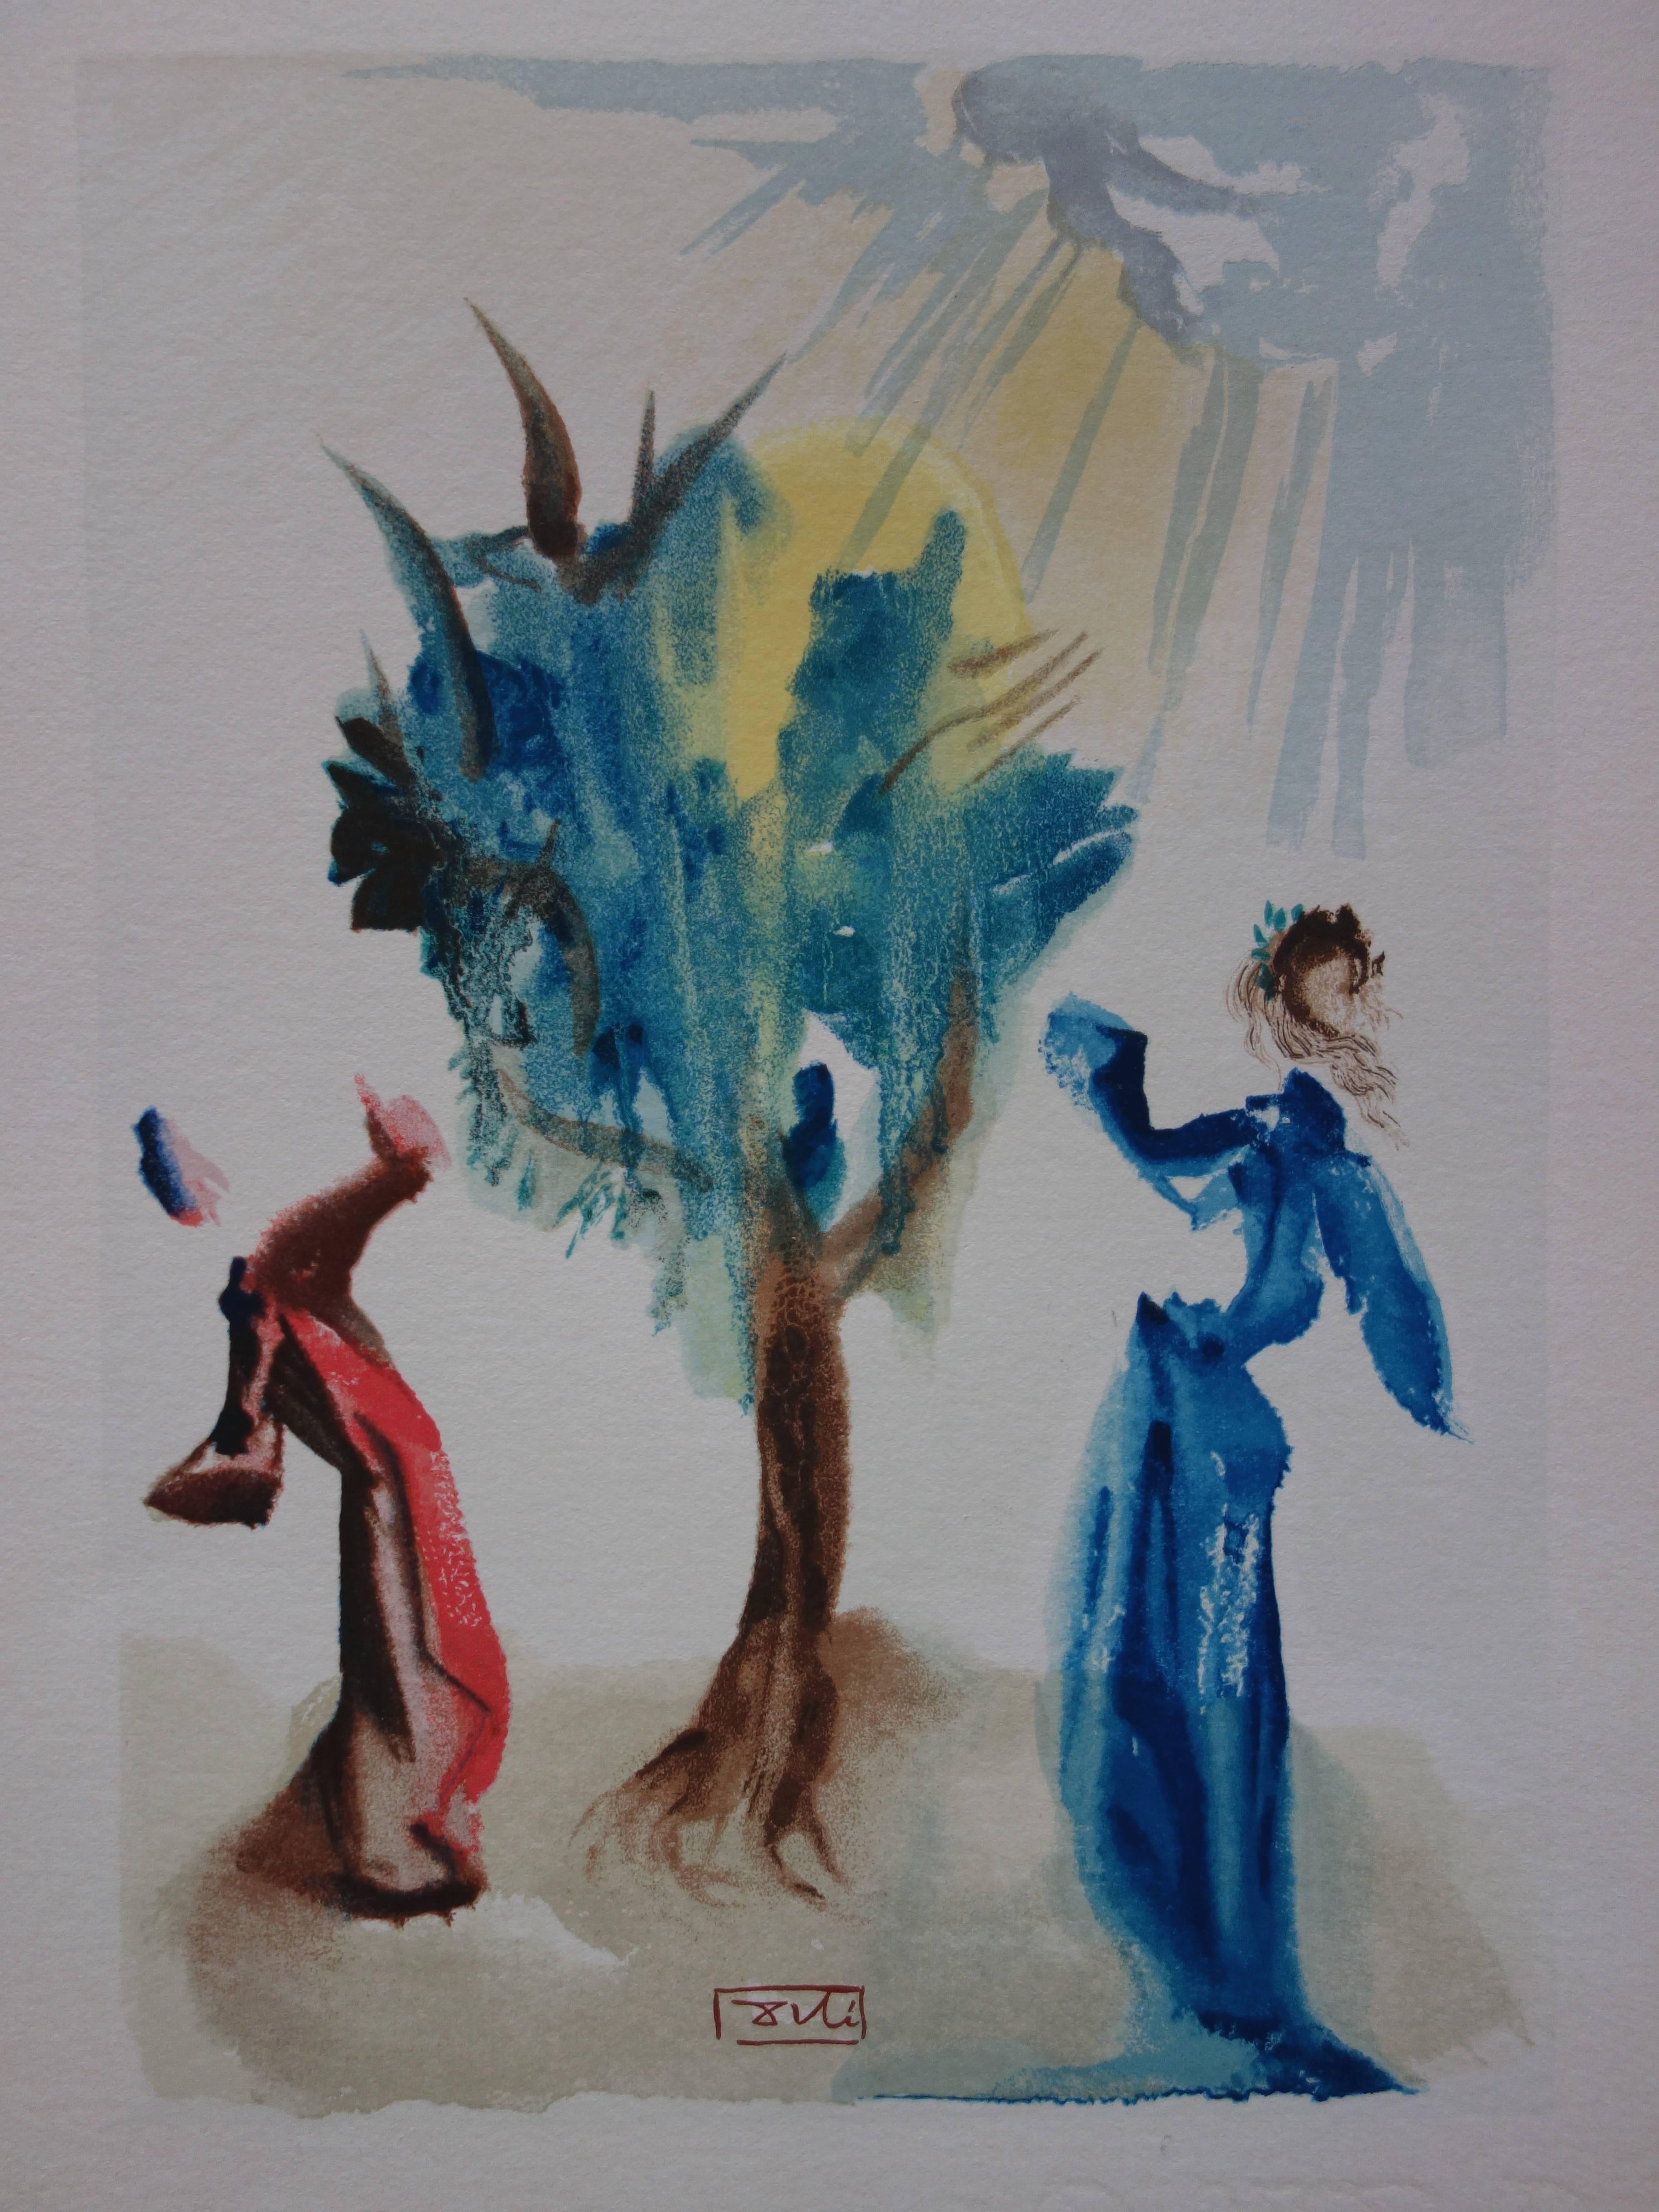 Purgatory 24, The Tree of Punishment – Farbholzschnitt – (Farbholzschnitt, S. 189) (Surrealismus), Print, von Salvador Dalí